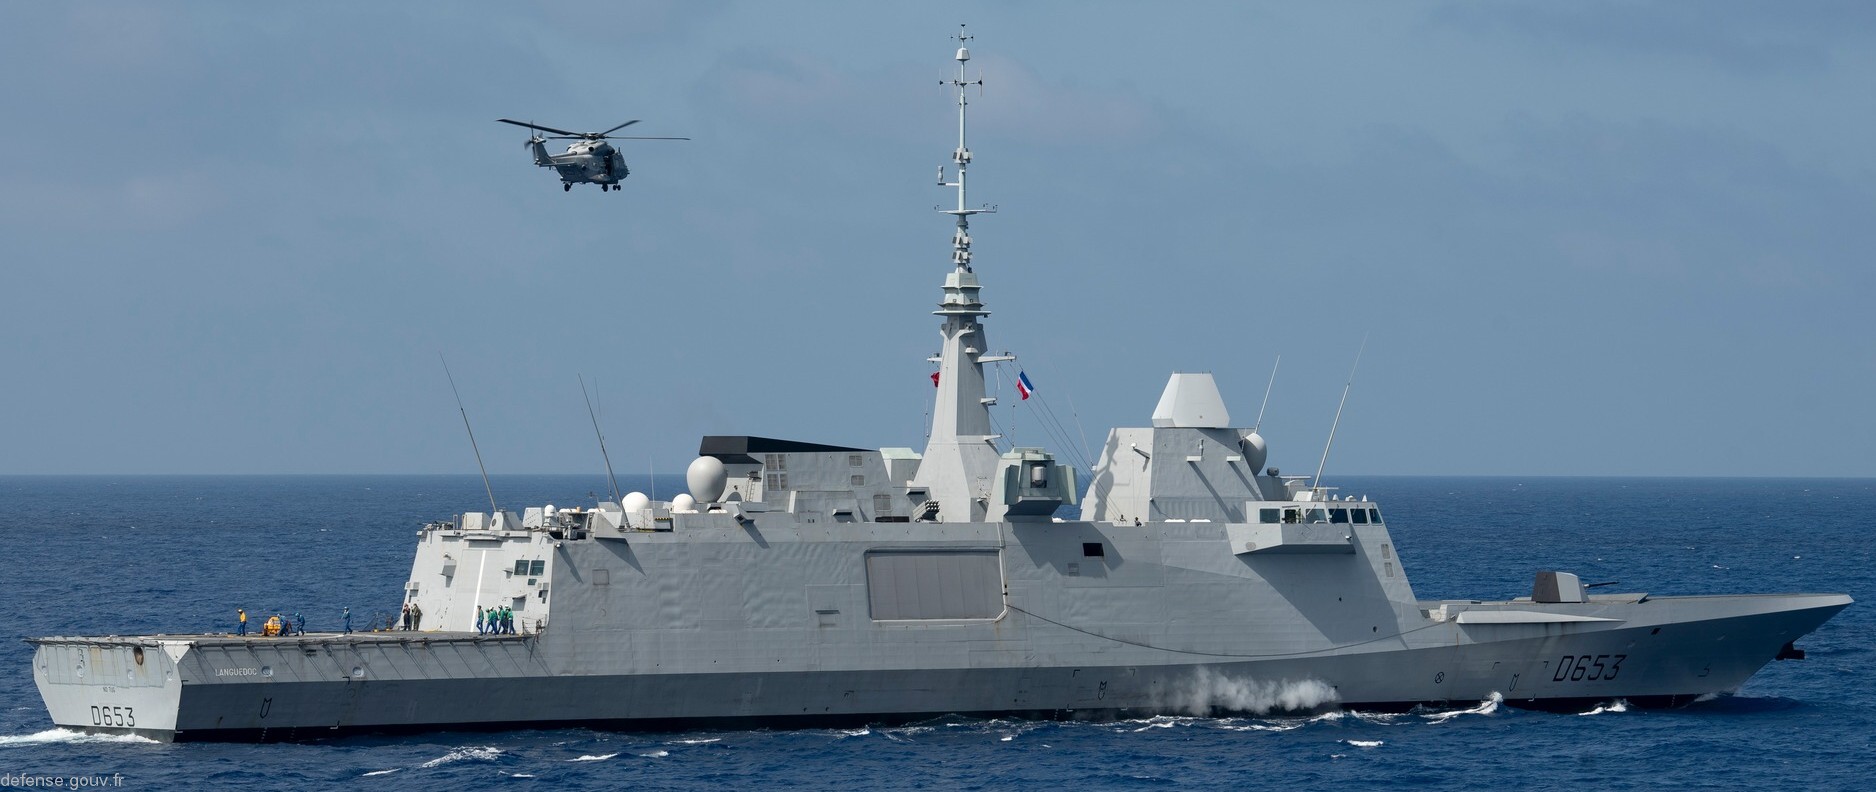 d-653 fs languedoc fremm aquitaine class frigate fregate multi purpose french navy marine nationale 16